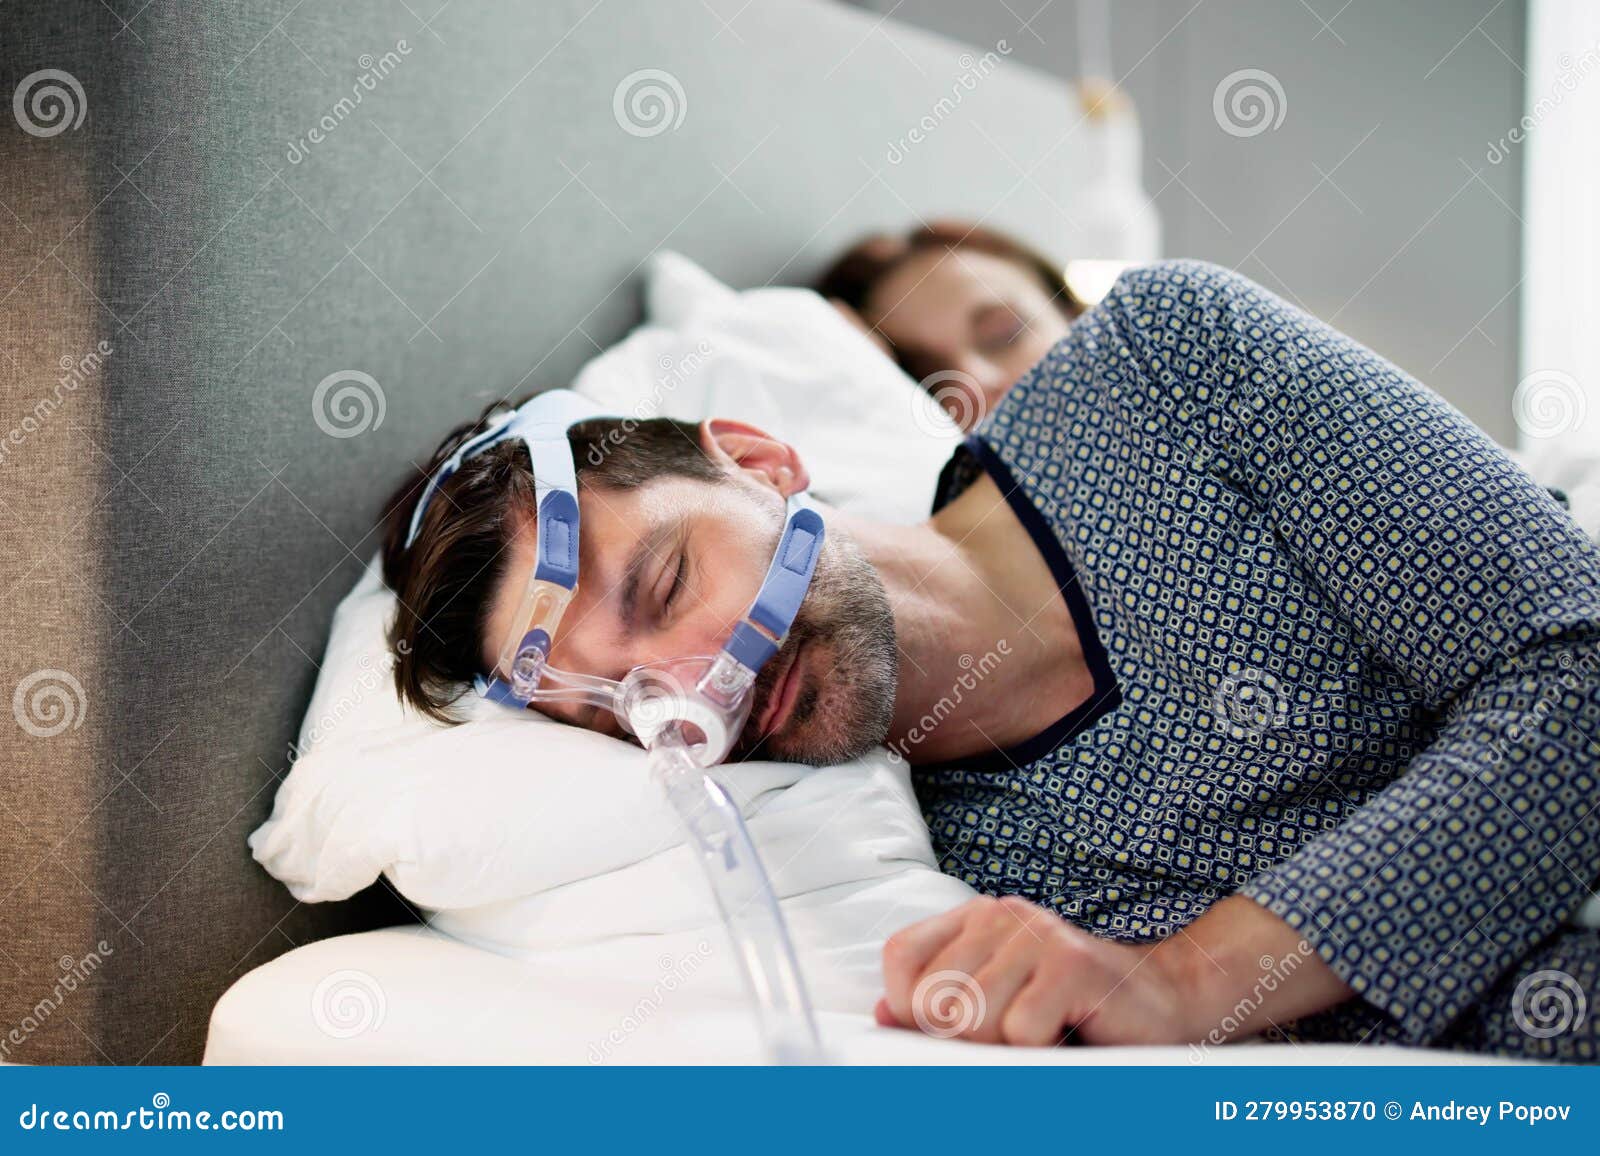 Sleep Apnea Oxygen Mask Equipment Stock Photo - Image of insomnia ...